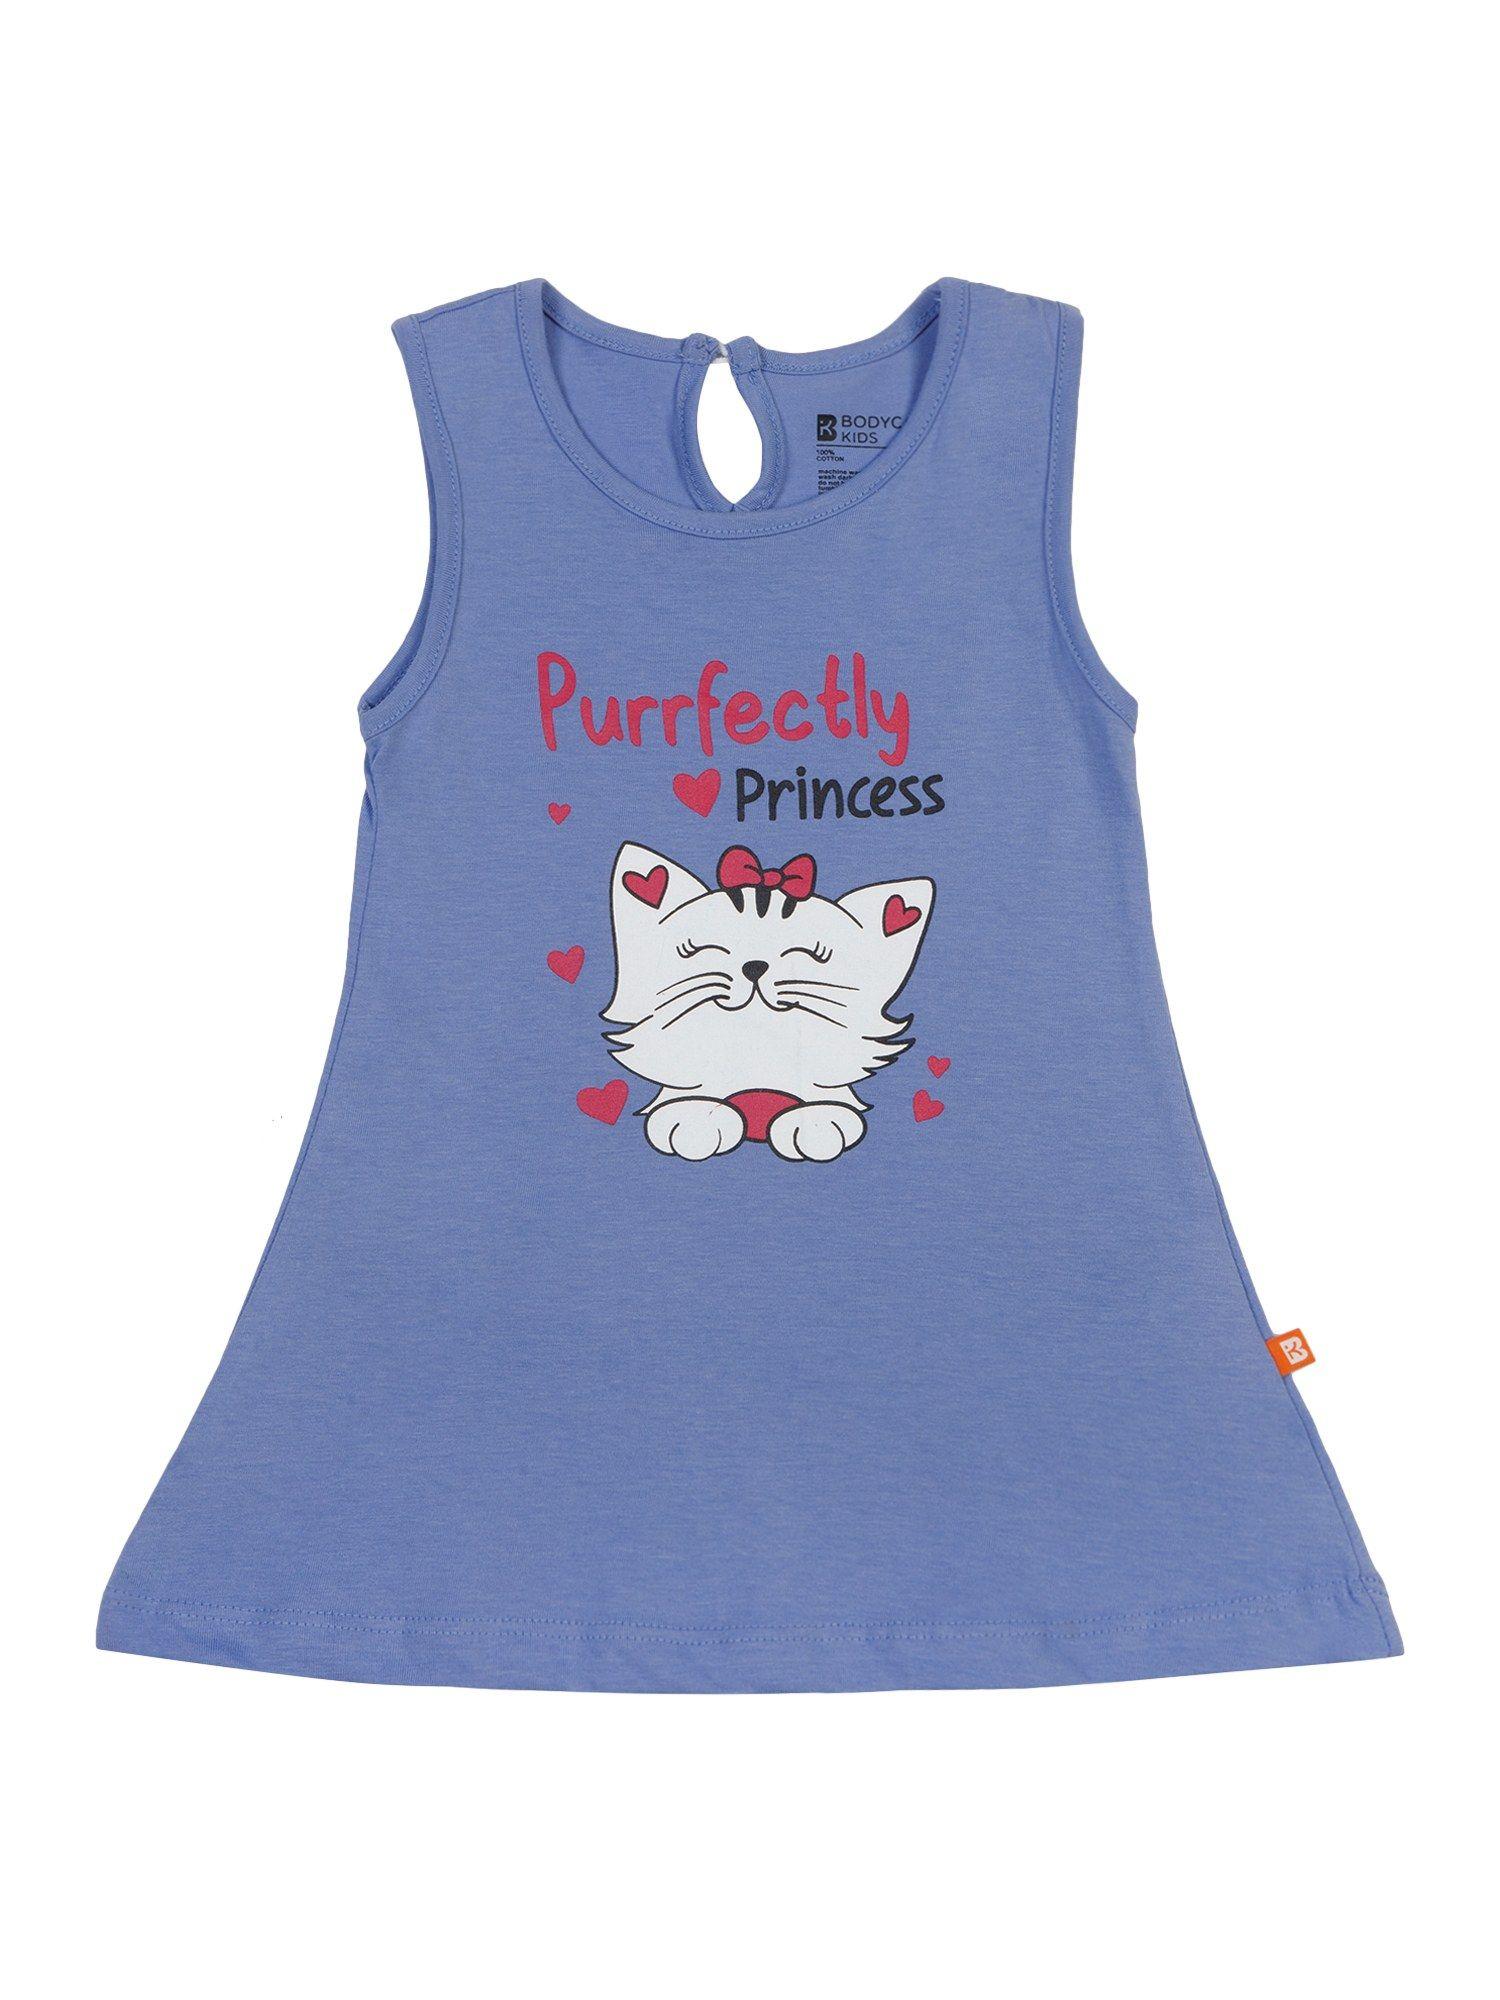 purrfectly princess printed dress